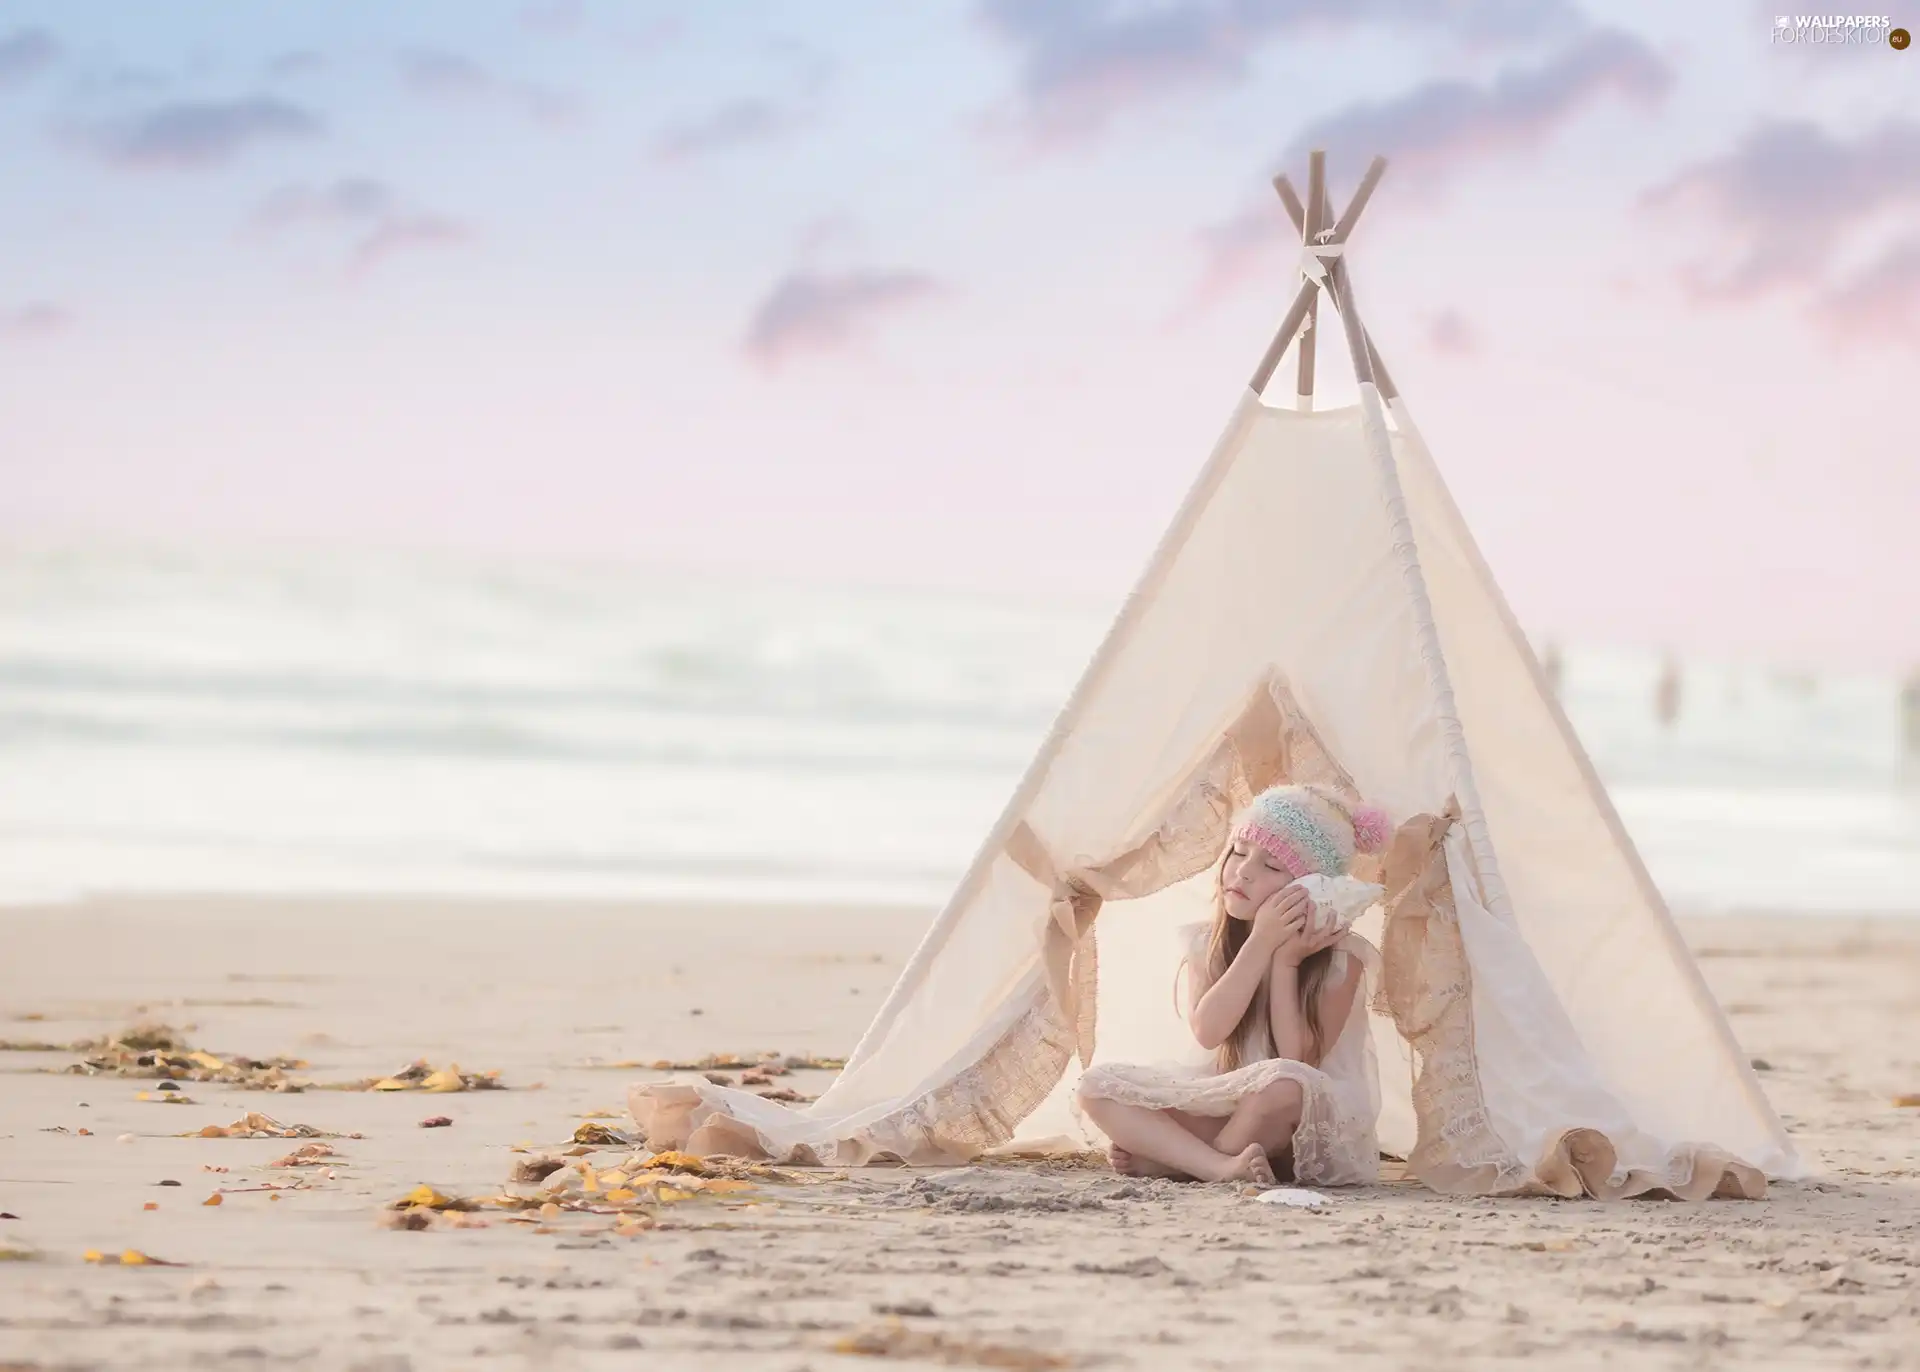 Tent, Beaches, Kid, shell, girl